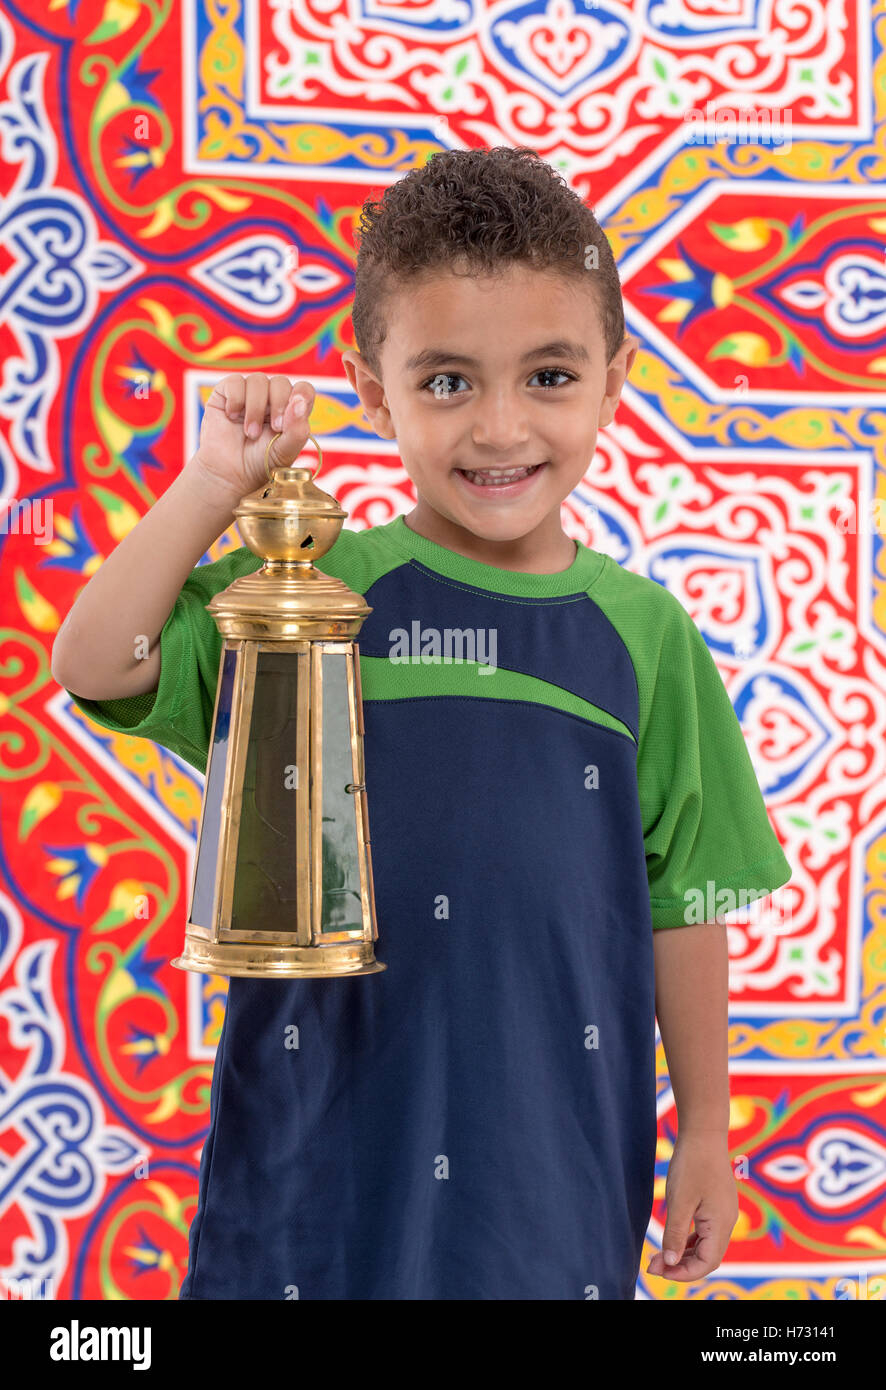 Adorable Young Boy with Vintage Lantern over Festive Ramadan Fabric Stock Photo